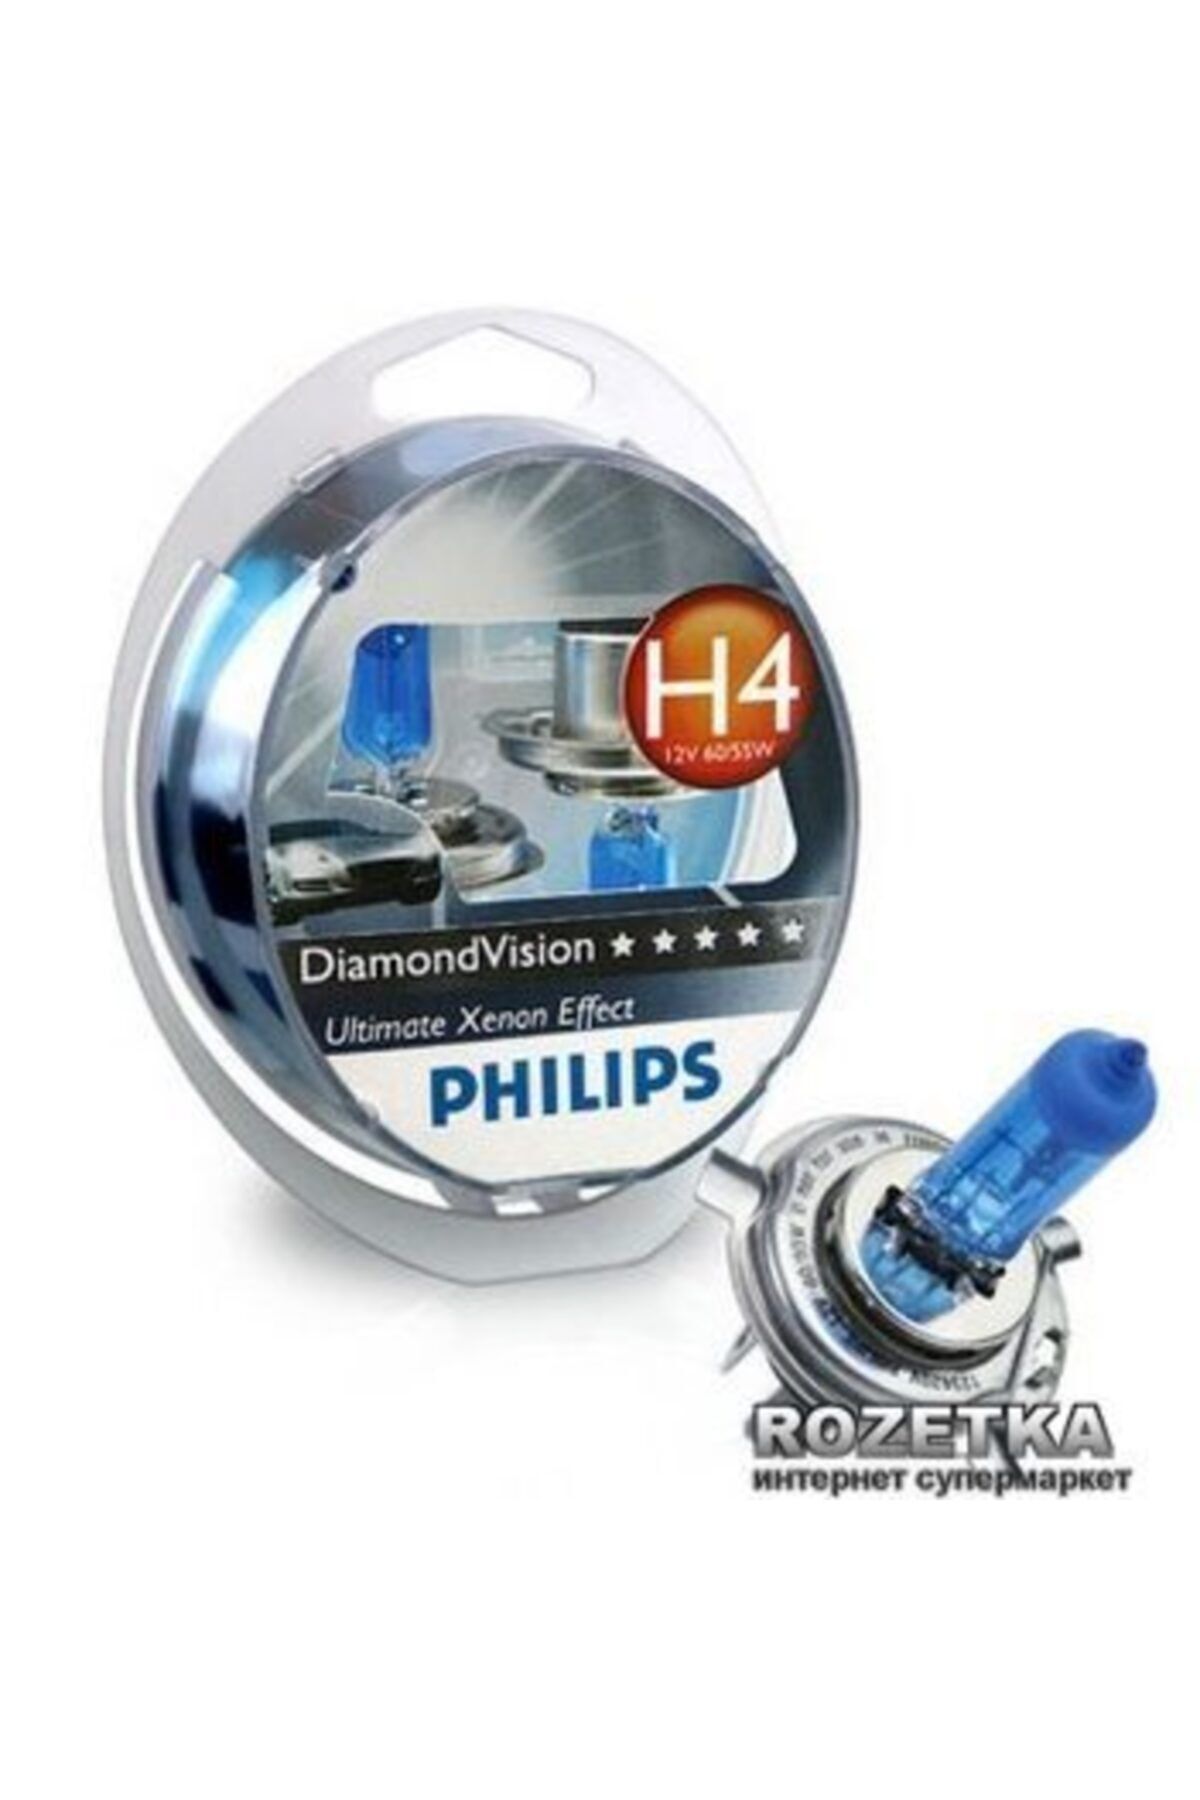 H4 12v 55w цена. Лампы Philips h4 55\60w-12v Diamond Vision 5000k. Philips 12v h4 60/55w Diamond Vision. Philips DIAMONDVISION h4 12v 60/55w 2шт. Лампа автомобильная Philips h4 12v 60/55w 5000k DIAMONDVISION 12342dv.